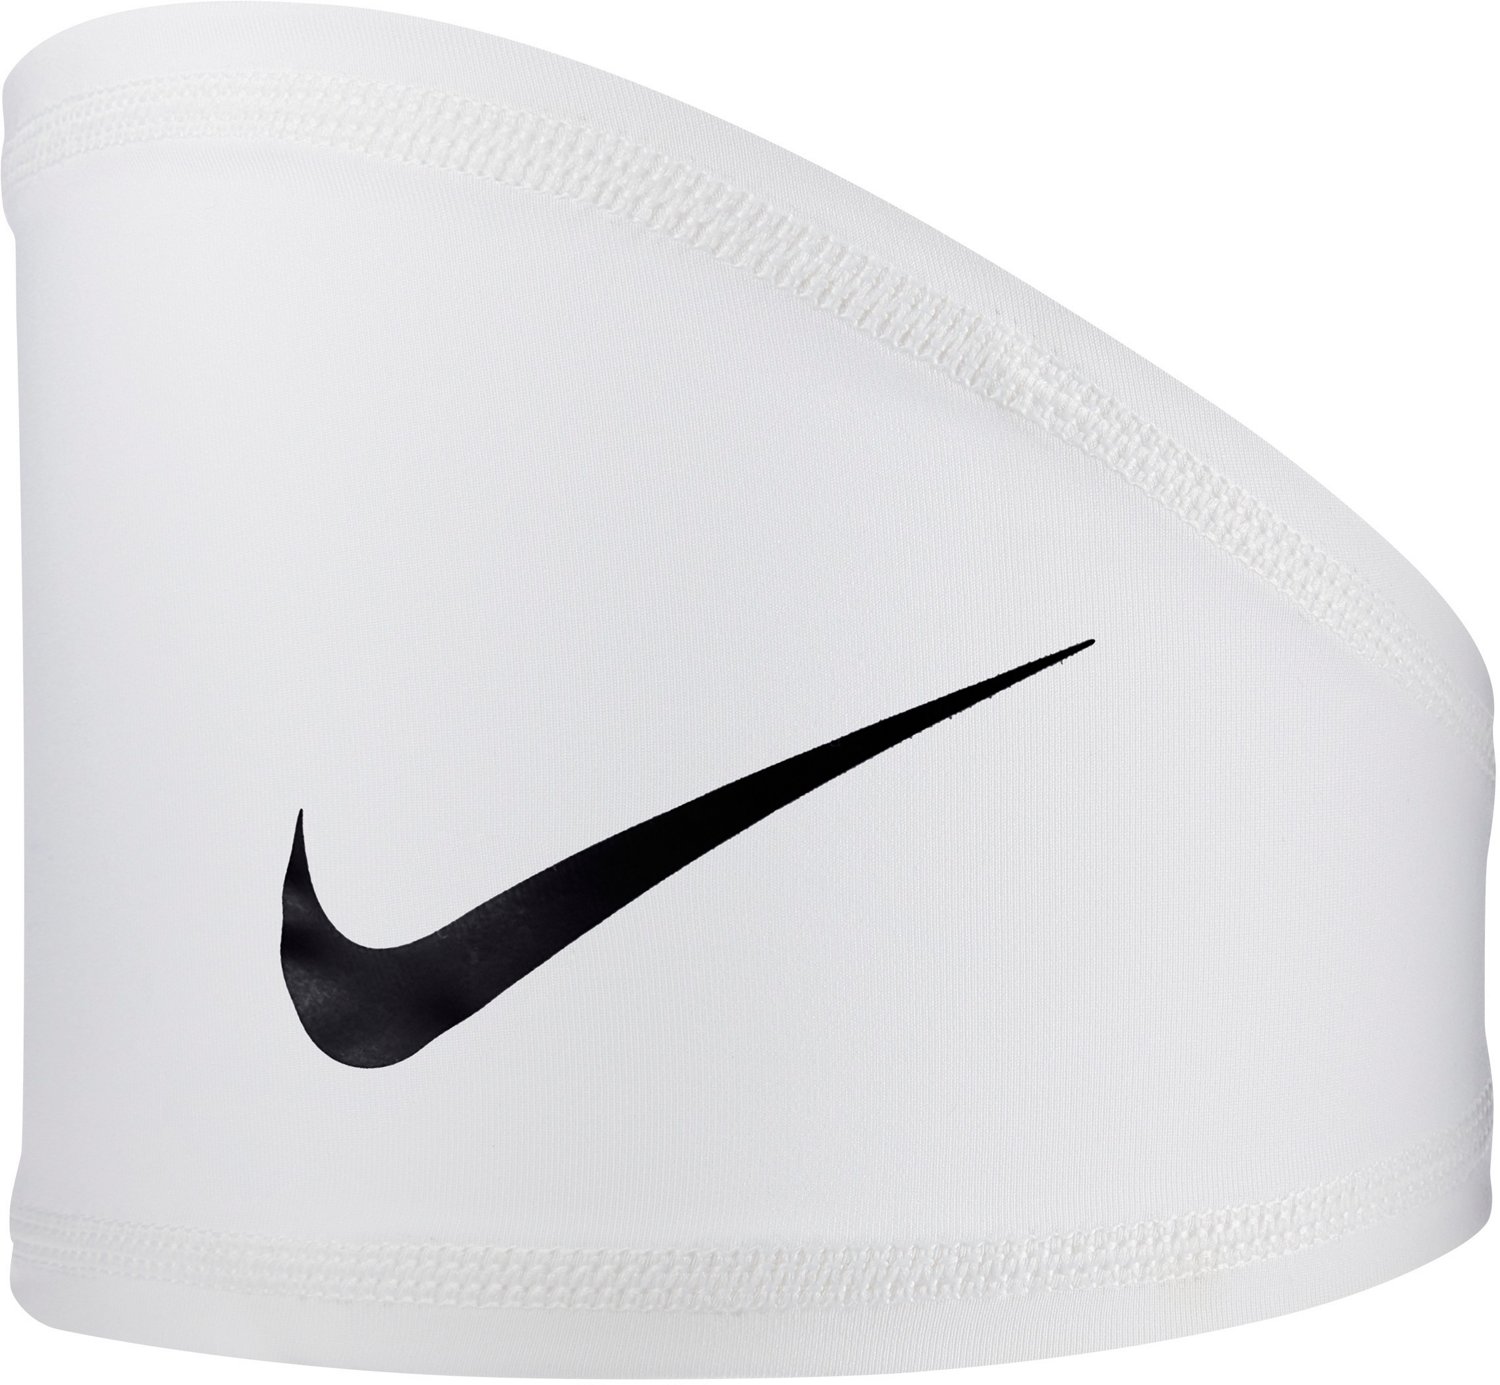 Nike Pro Dri-Fit Skull Wrap 5.0 White/Black Adult Unisex OSFM